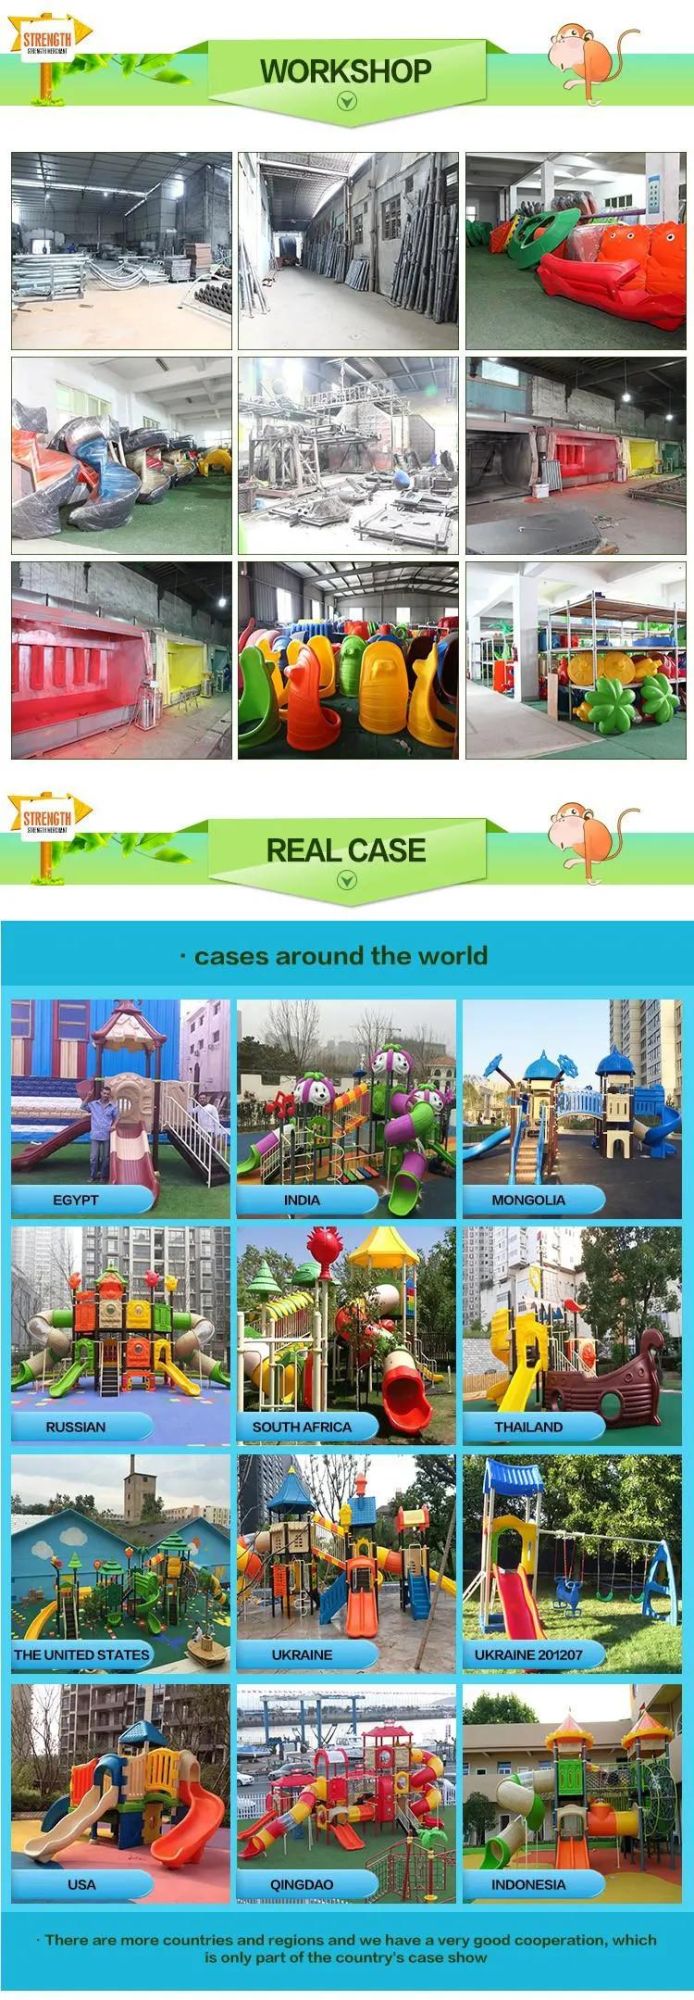 Outdoor Play Set Toy Slide Kids Dream of Pleasure Island Serise